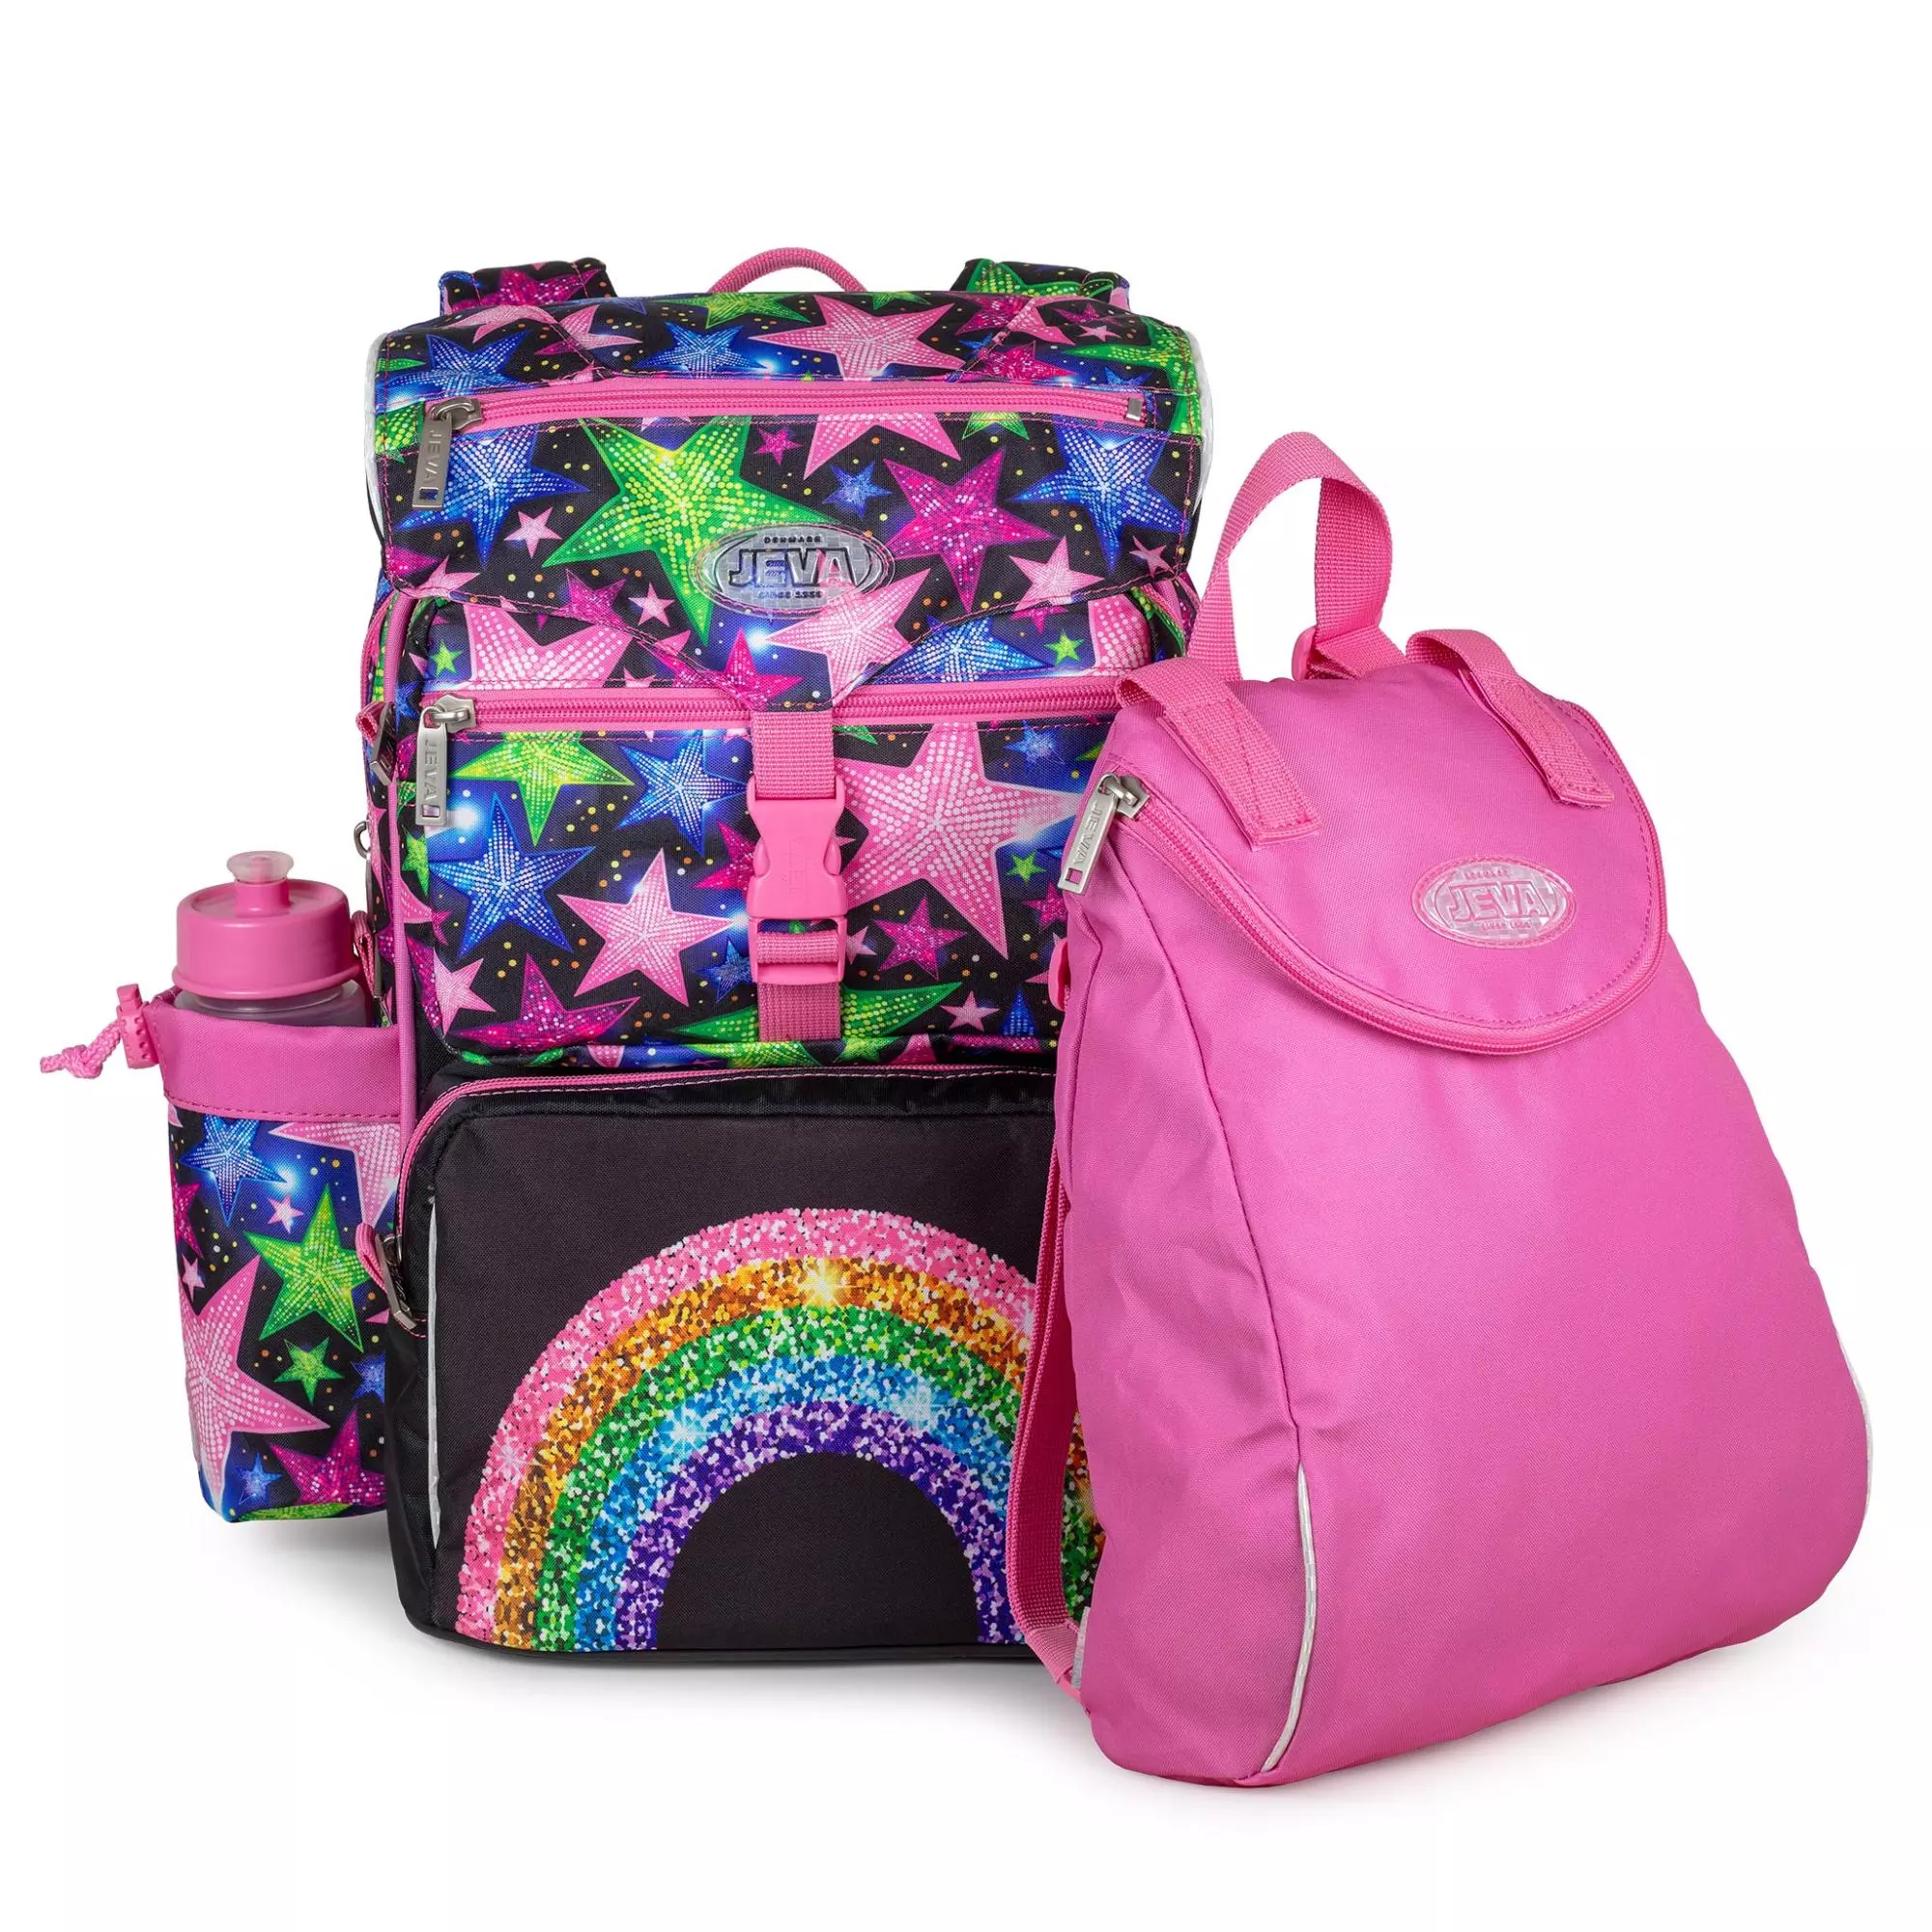 Jeva Schoolbag Plus L Beginners Rainbow